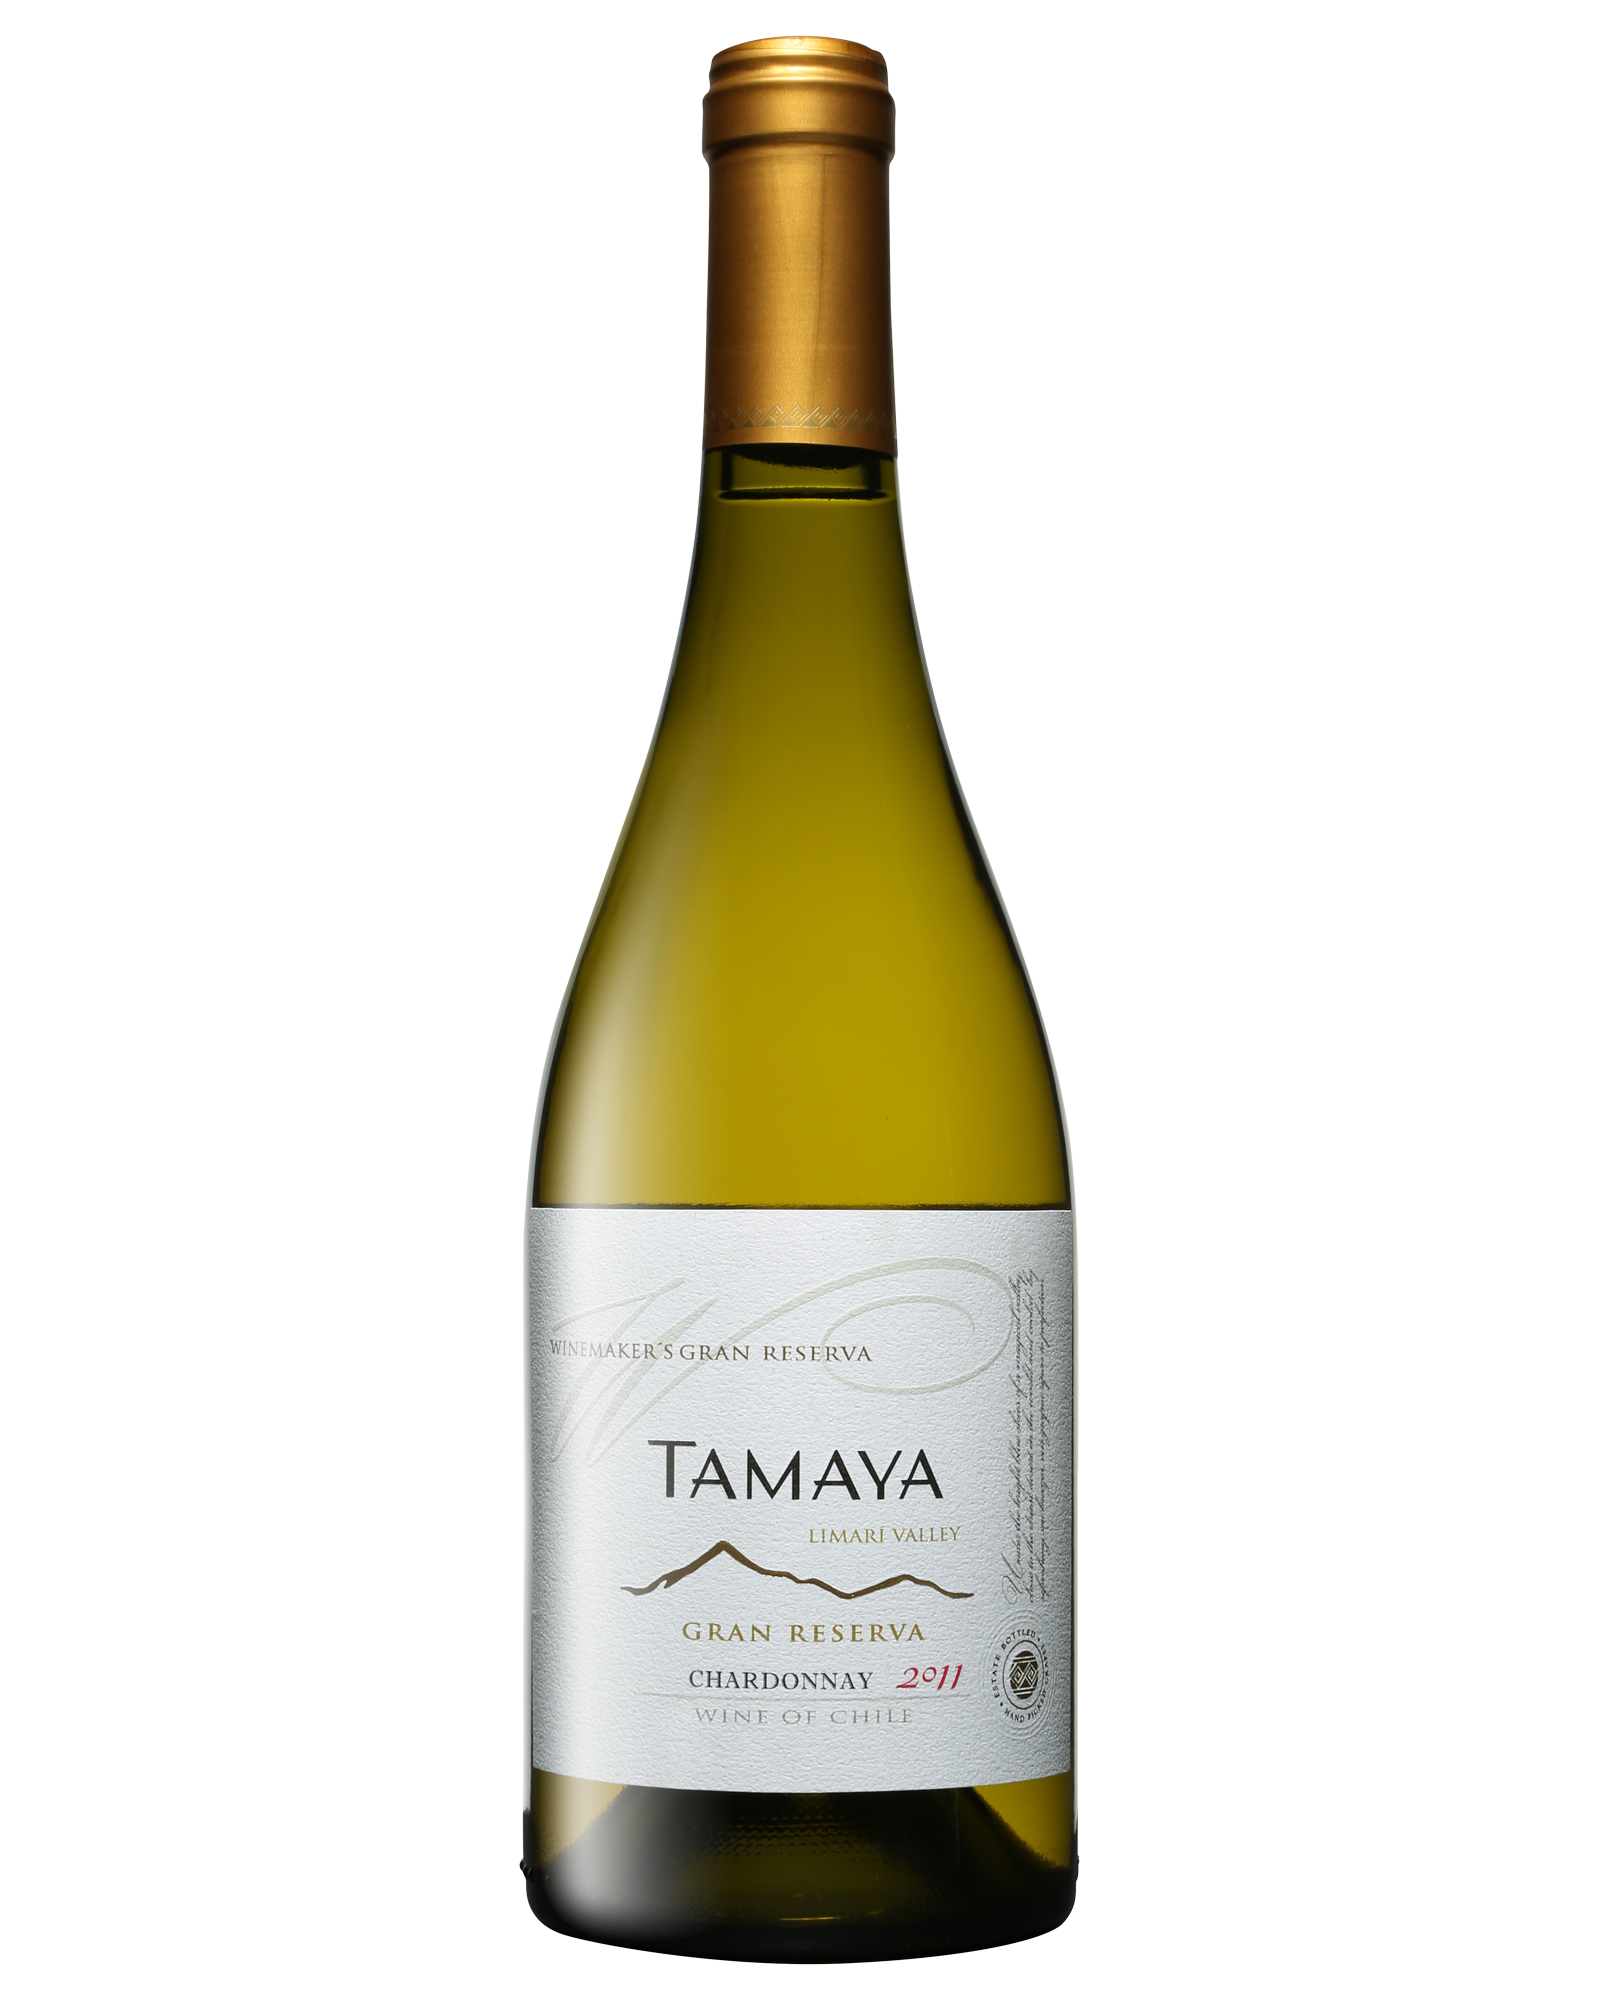 Tamaya Gran Reserva Chardonnay 2011